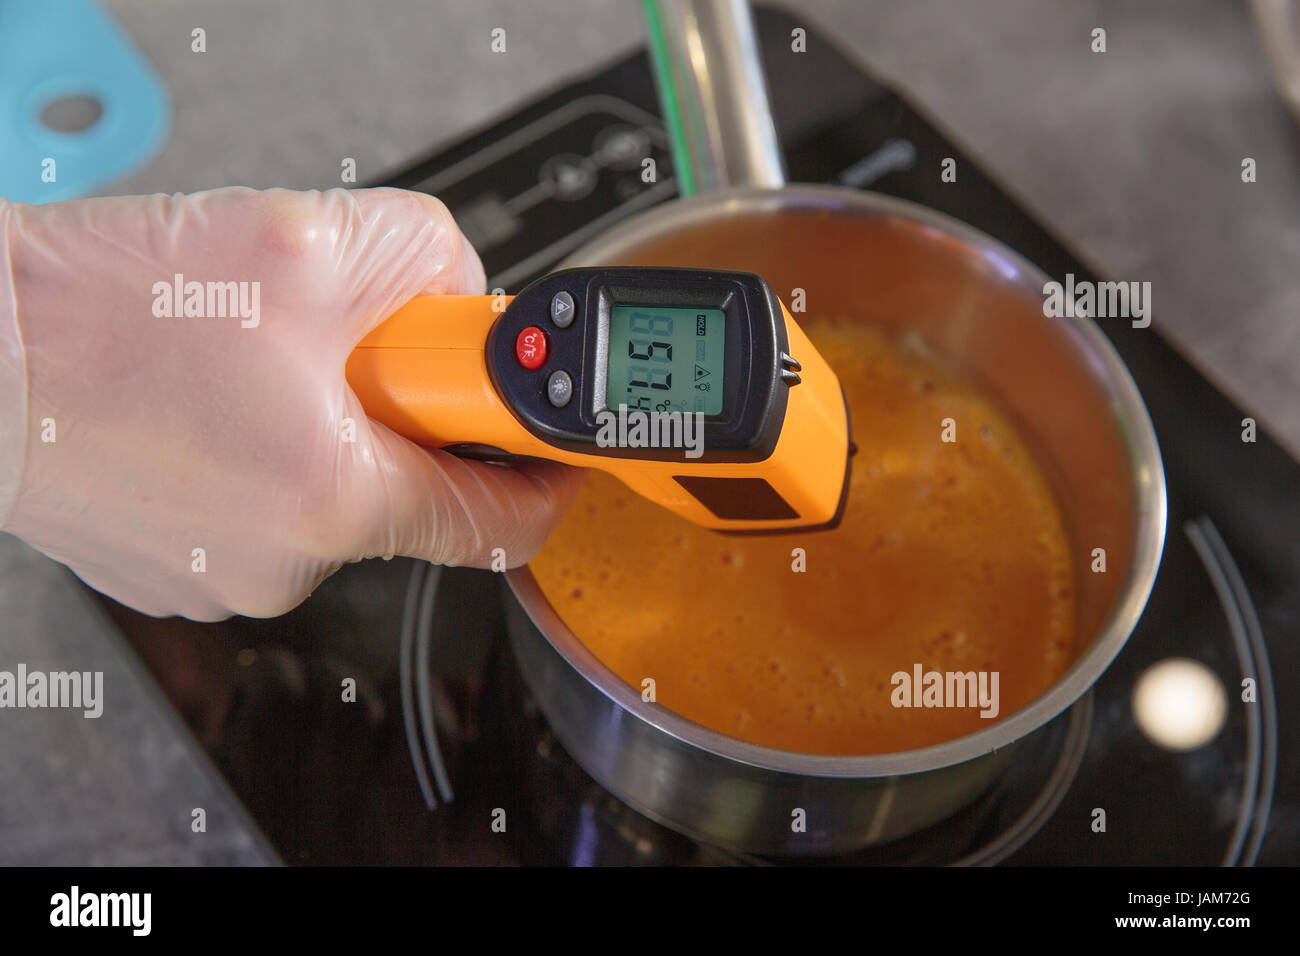 https://c8.alamy.com/comp/JAM72G/measuring-the-temperature-of-cream-soup-by-digital-thermometer-JAM72G.jpg